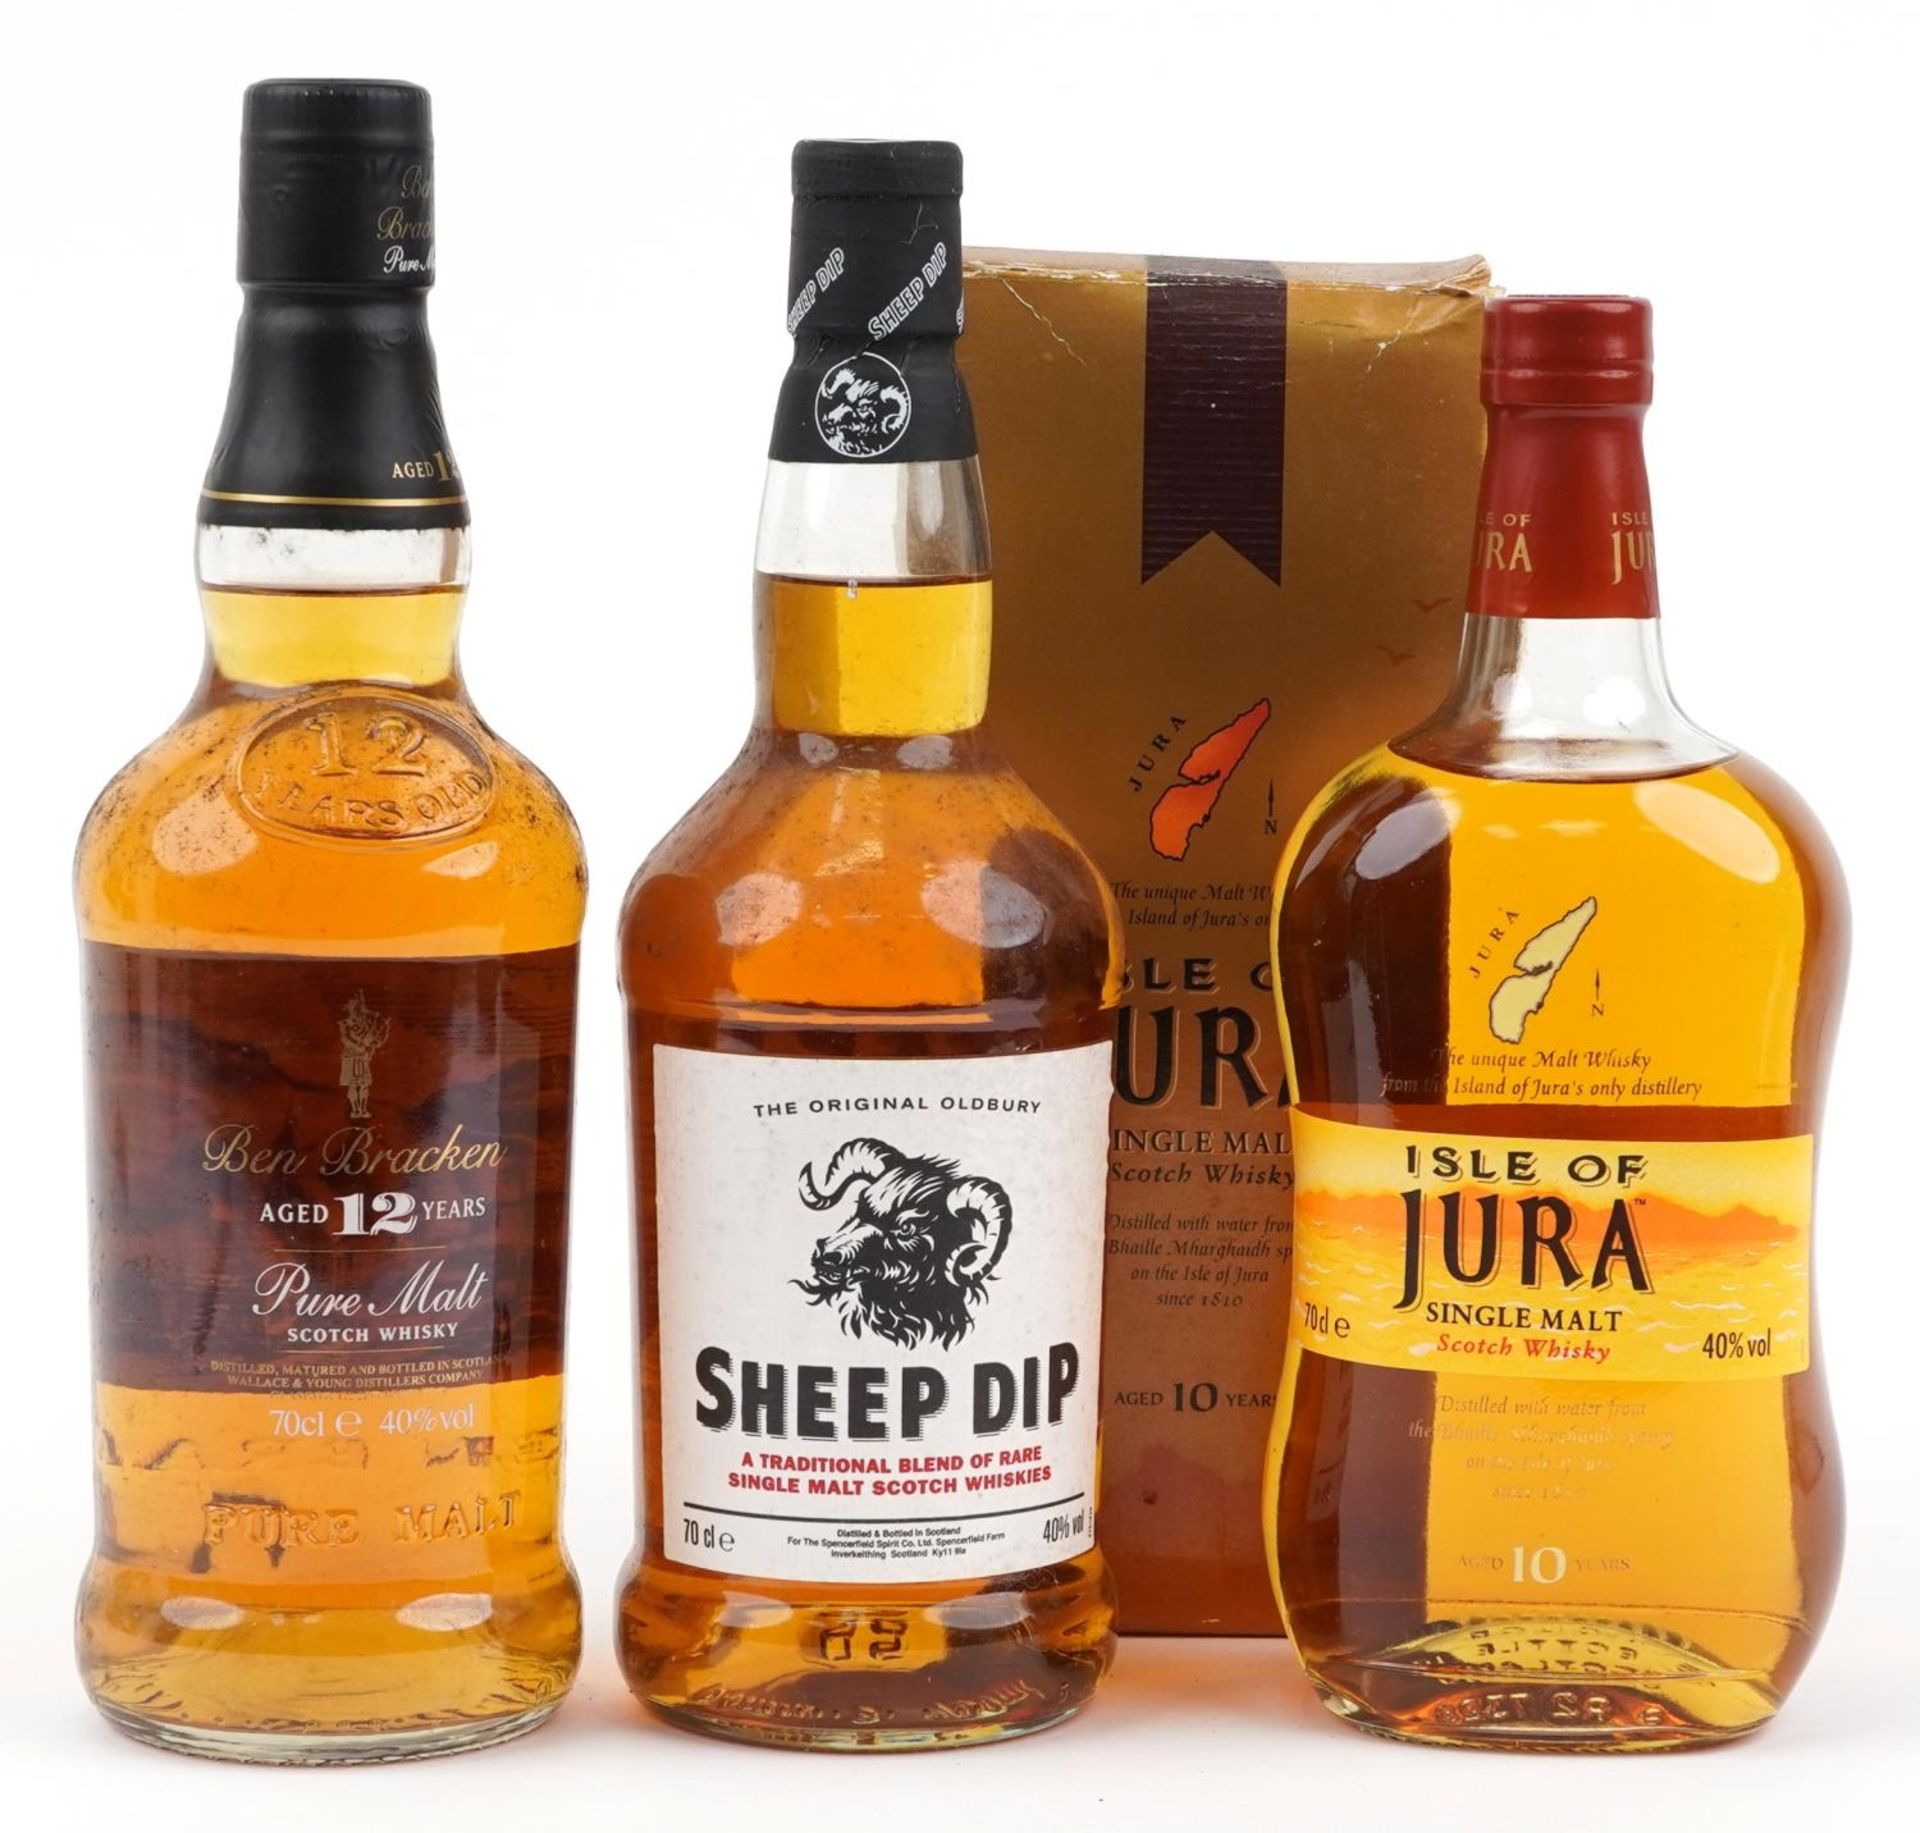 Three bottles of Scotch whisky comprising Isle of Jura aged 10 years, Sheep Dip and Ben Bracken aged